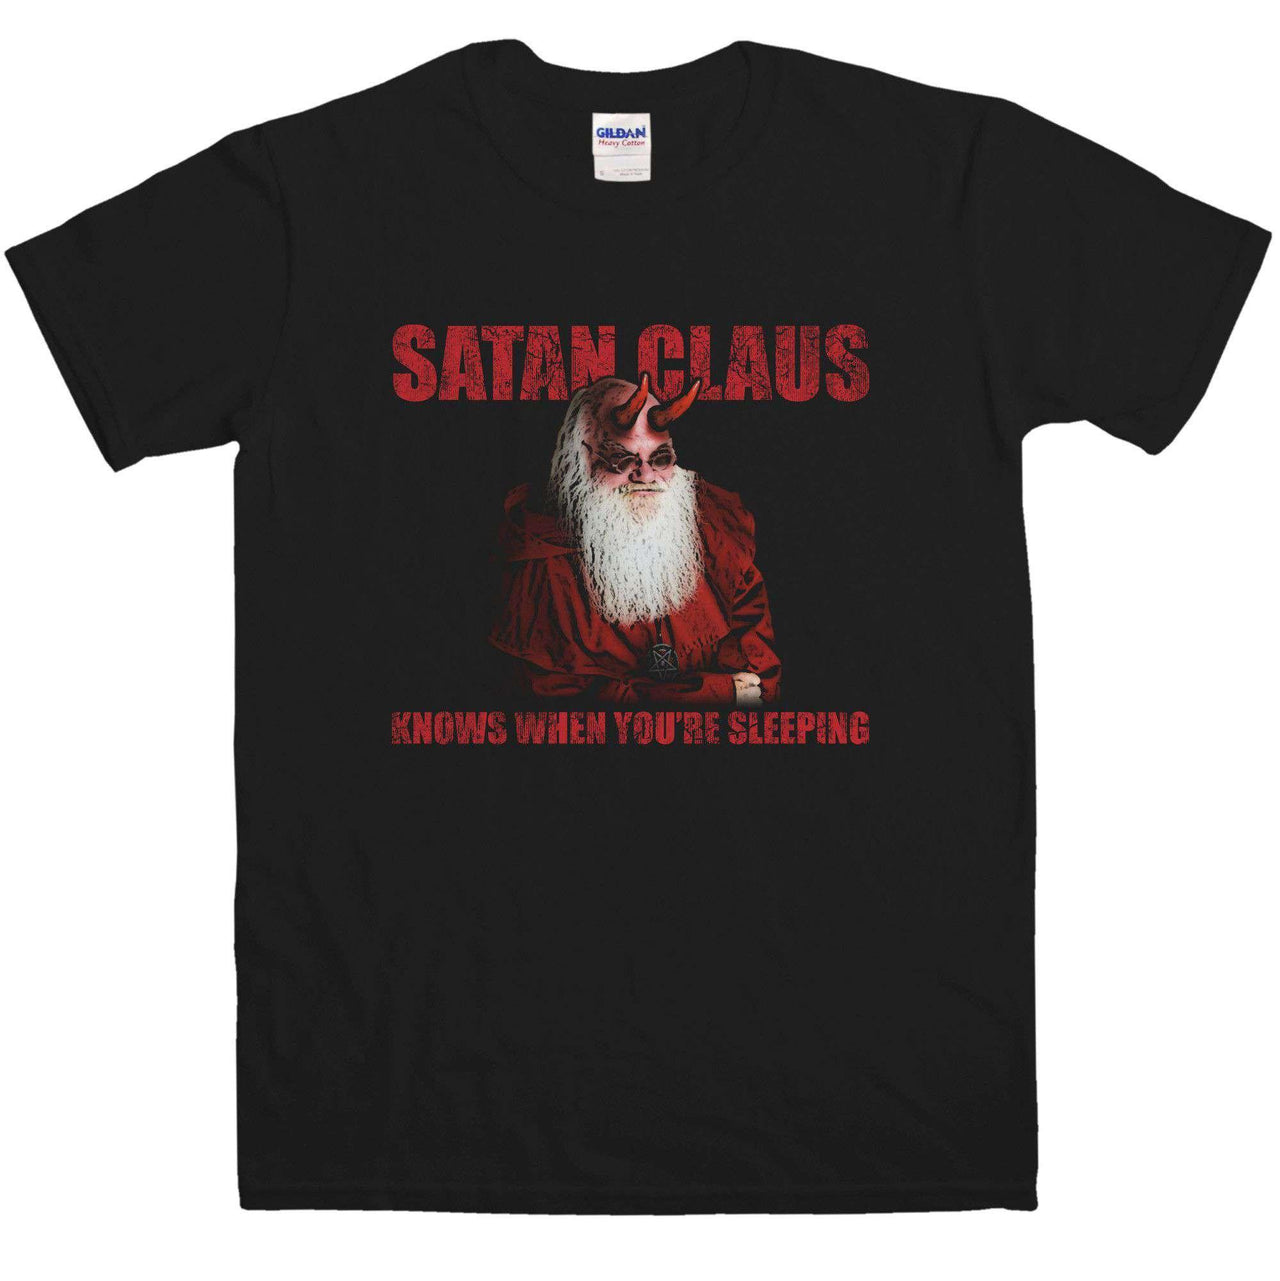 Satan Claus T-Shirt For Men 8Ball